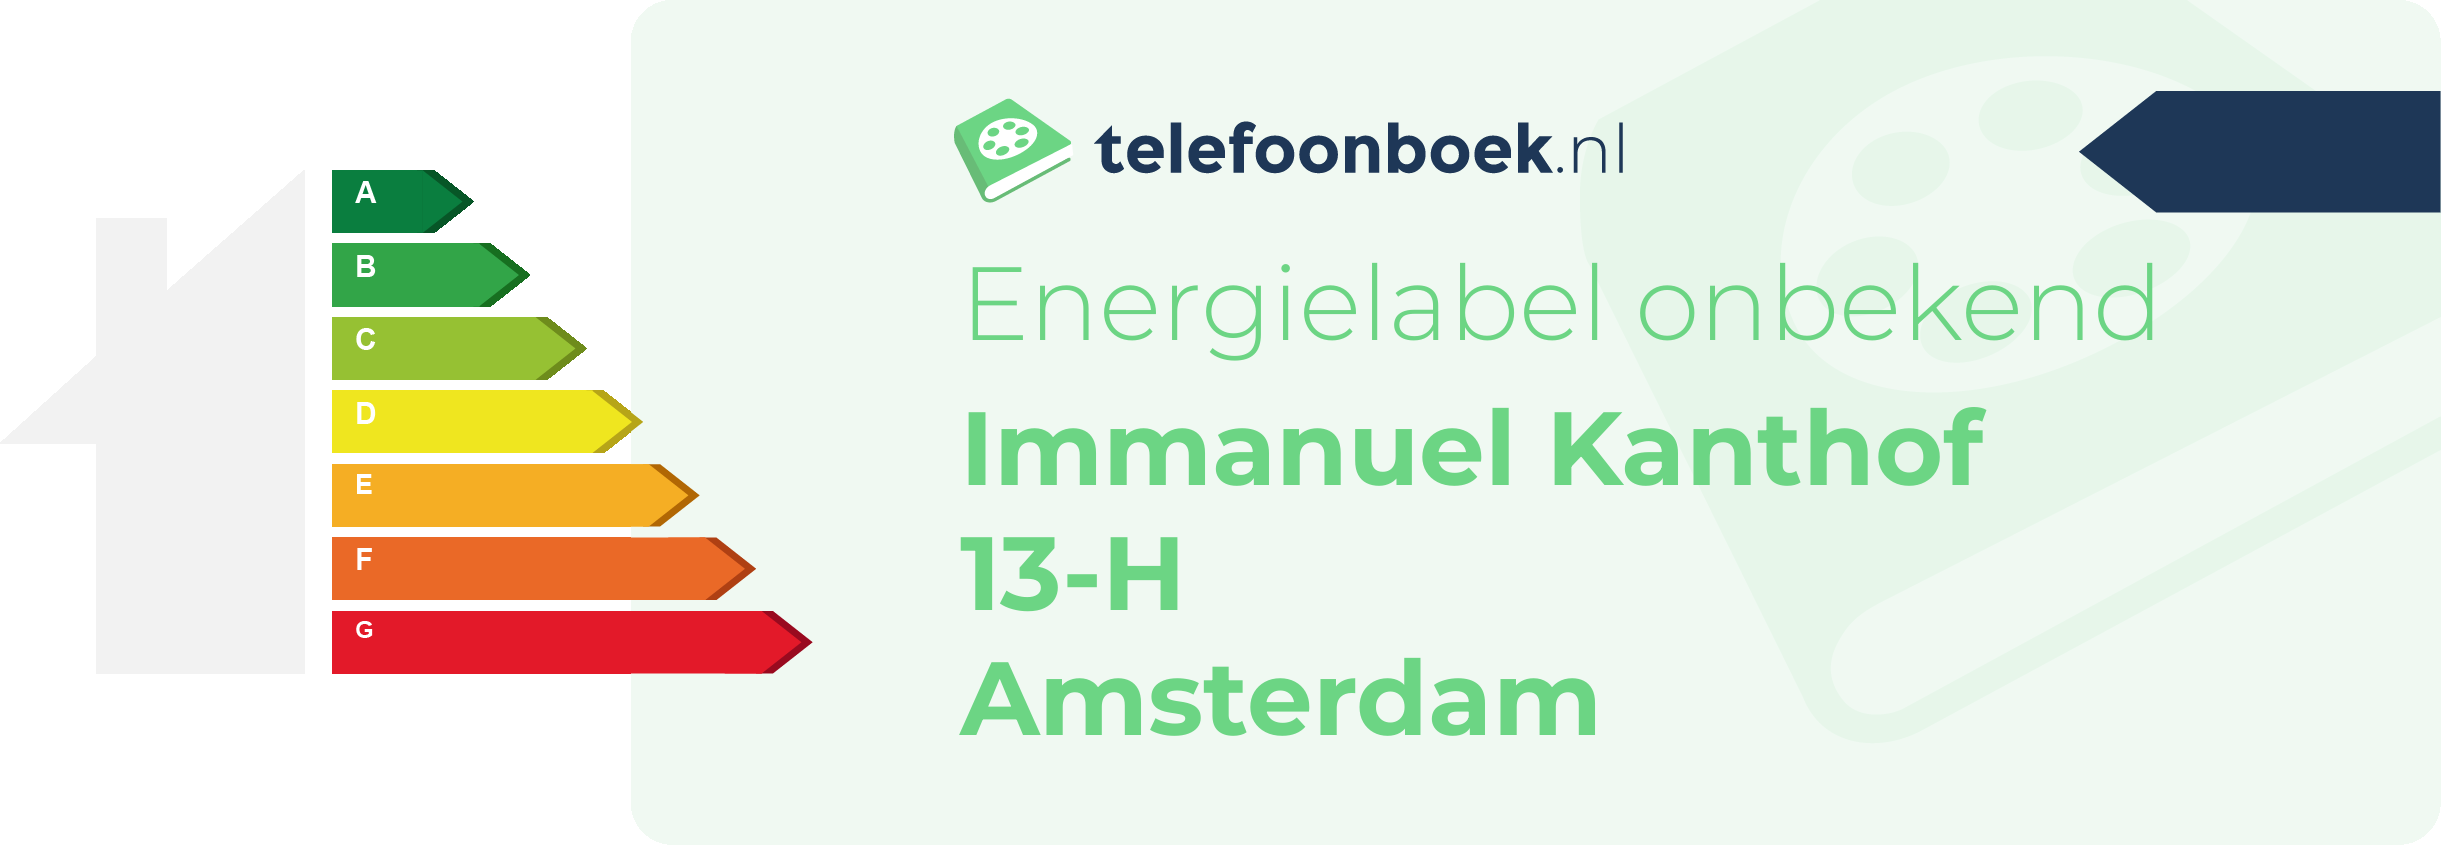 Energielabel Immanuel Kanthof 13-H Amsterdam